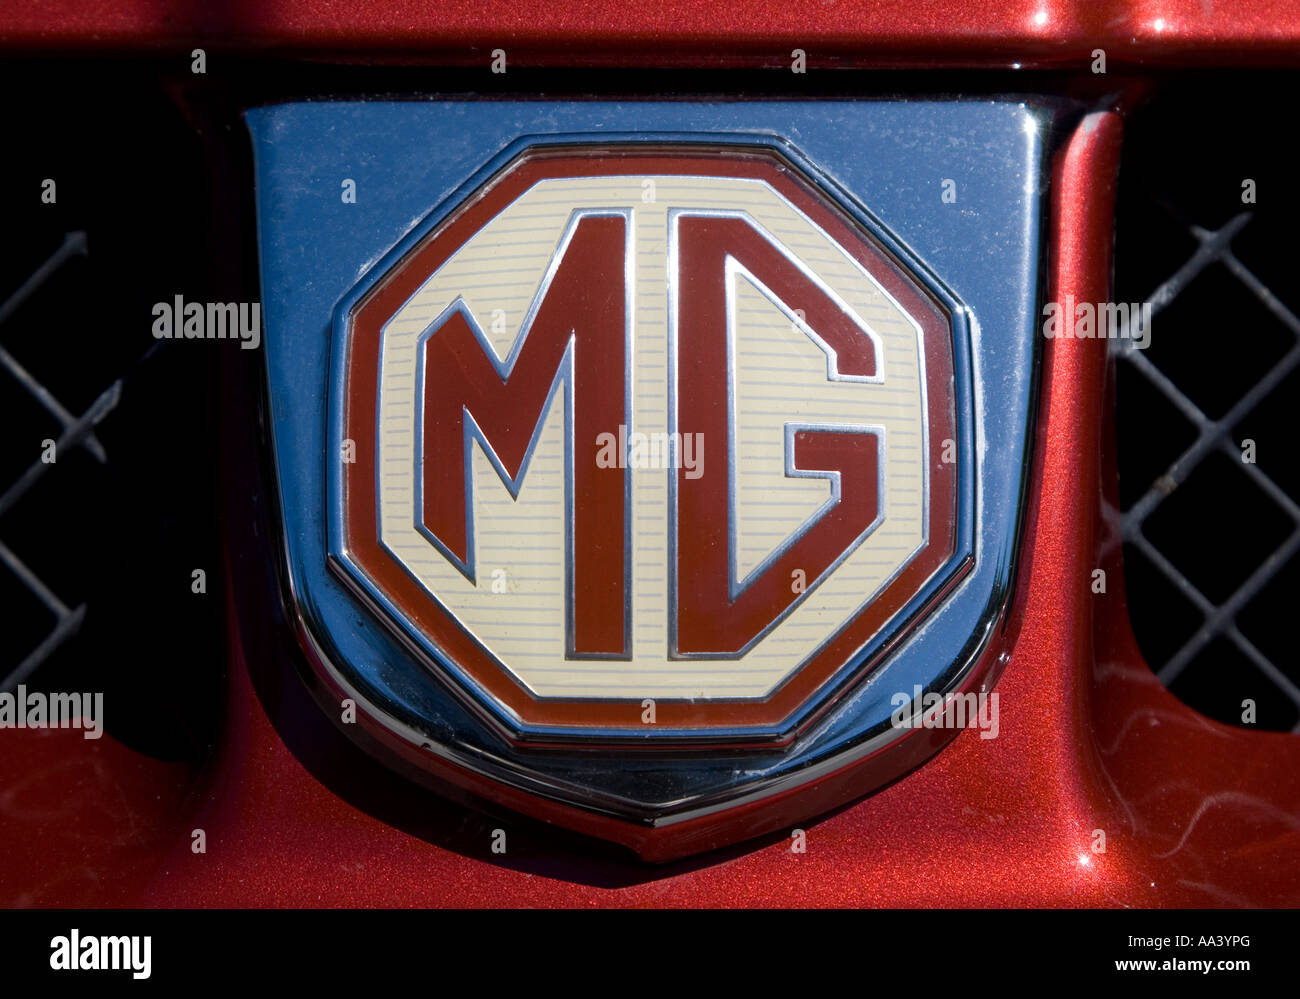 MG Stock Photo